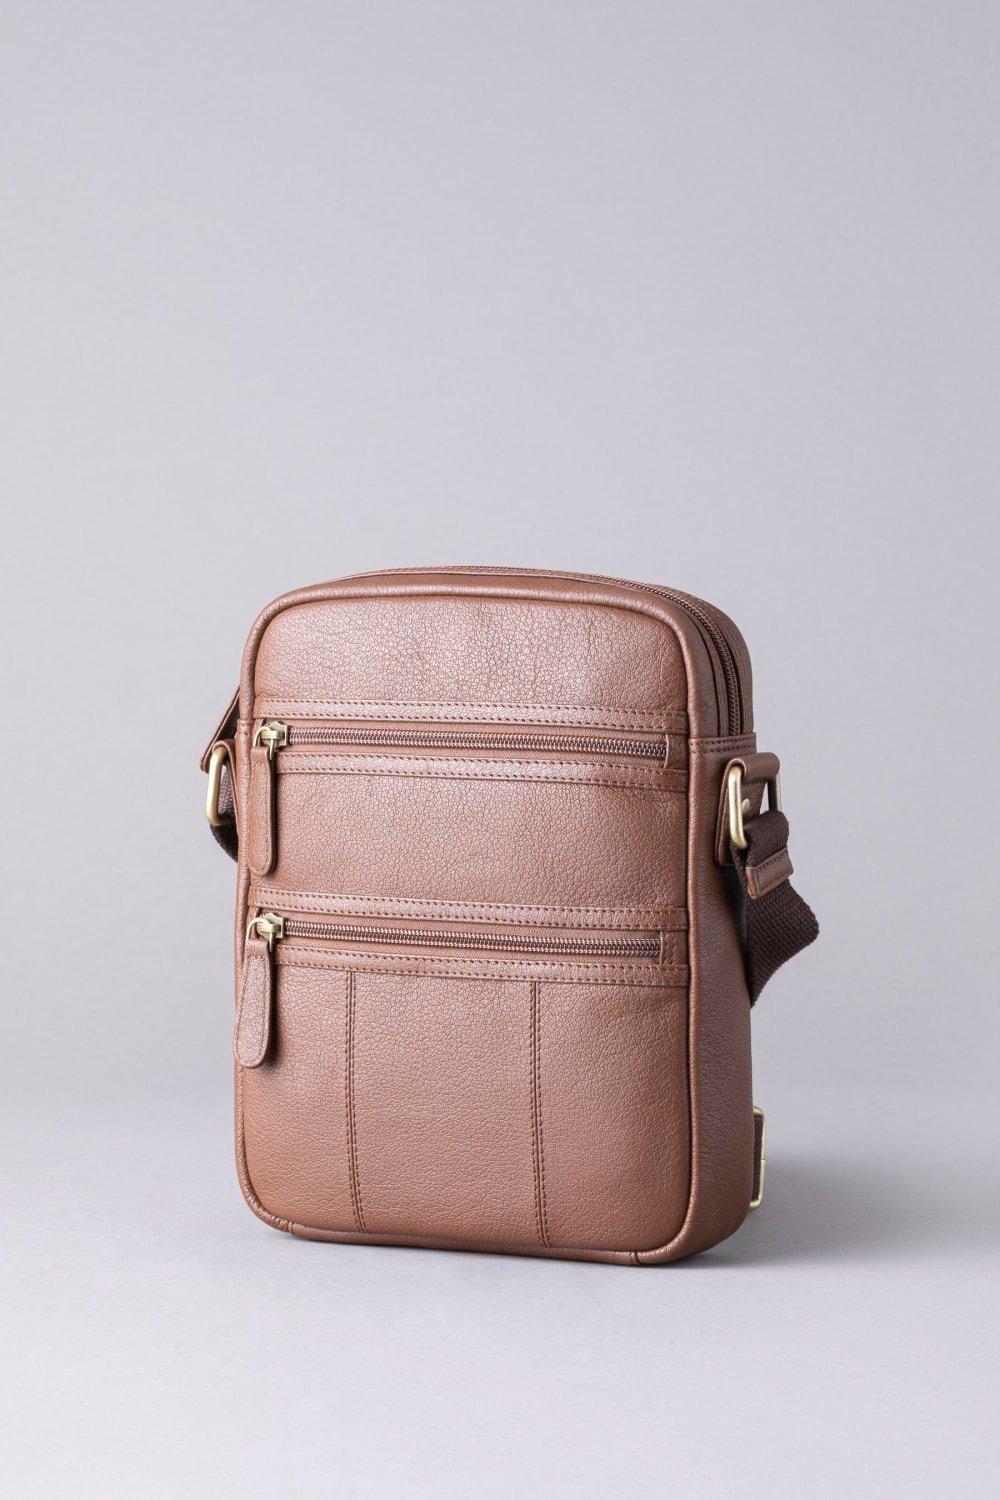 'Buffalo Explorer' Leather Messenger Bag